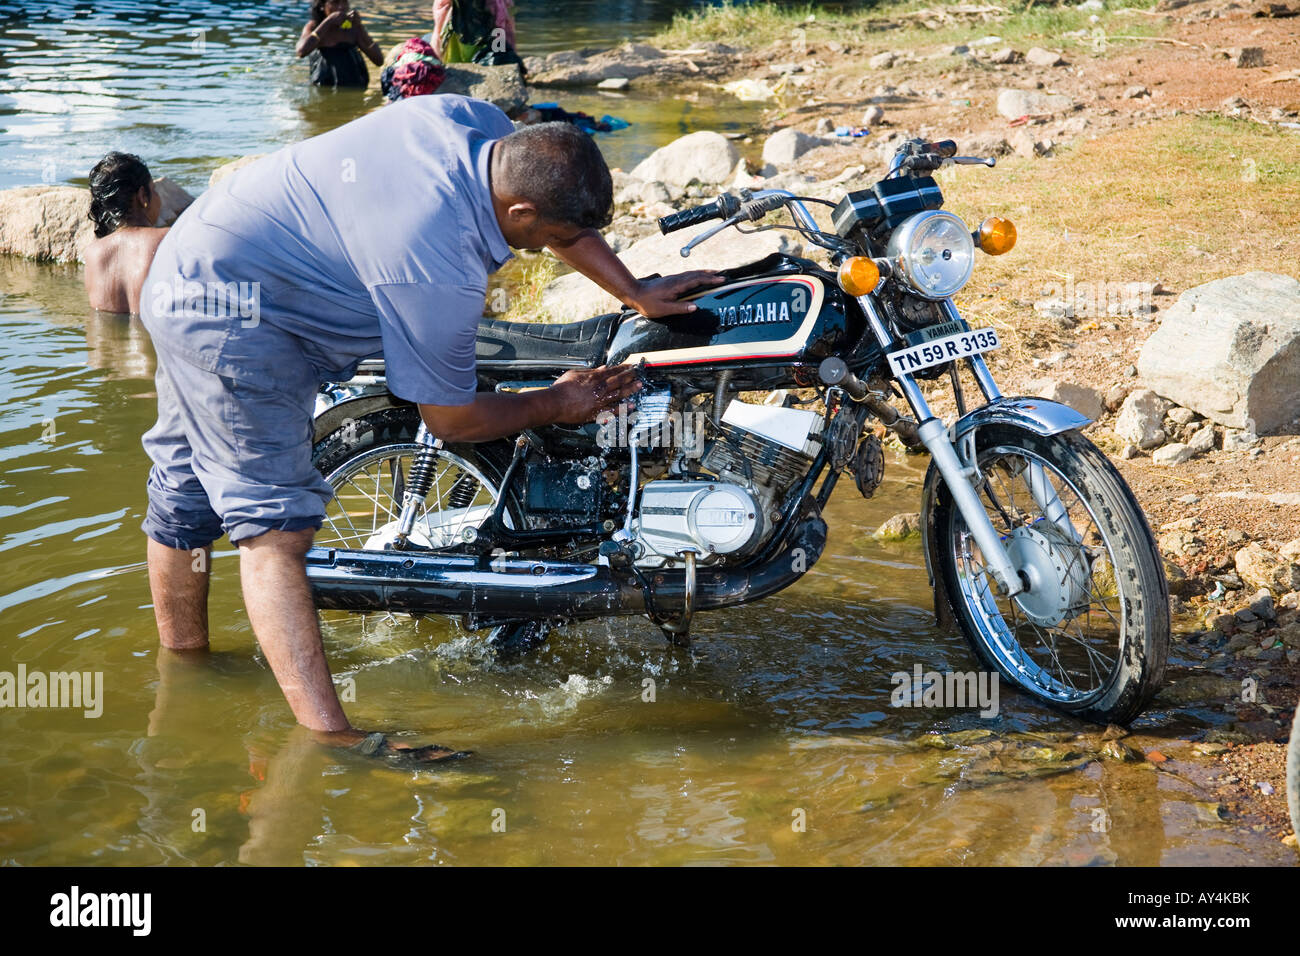 Man washing a motorcycle in a river, Madurai, Tamil Nadu, India Stock Photo